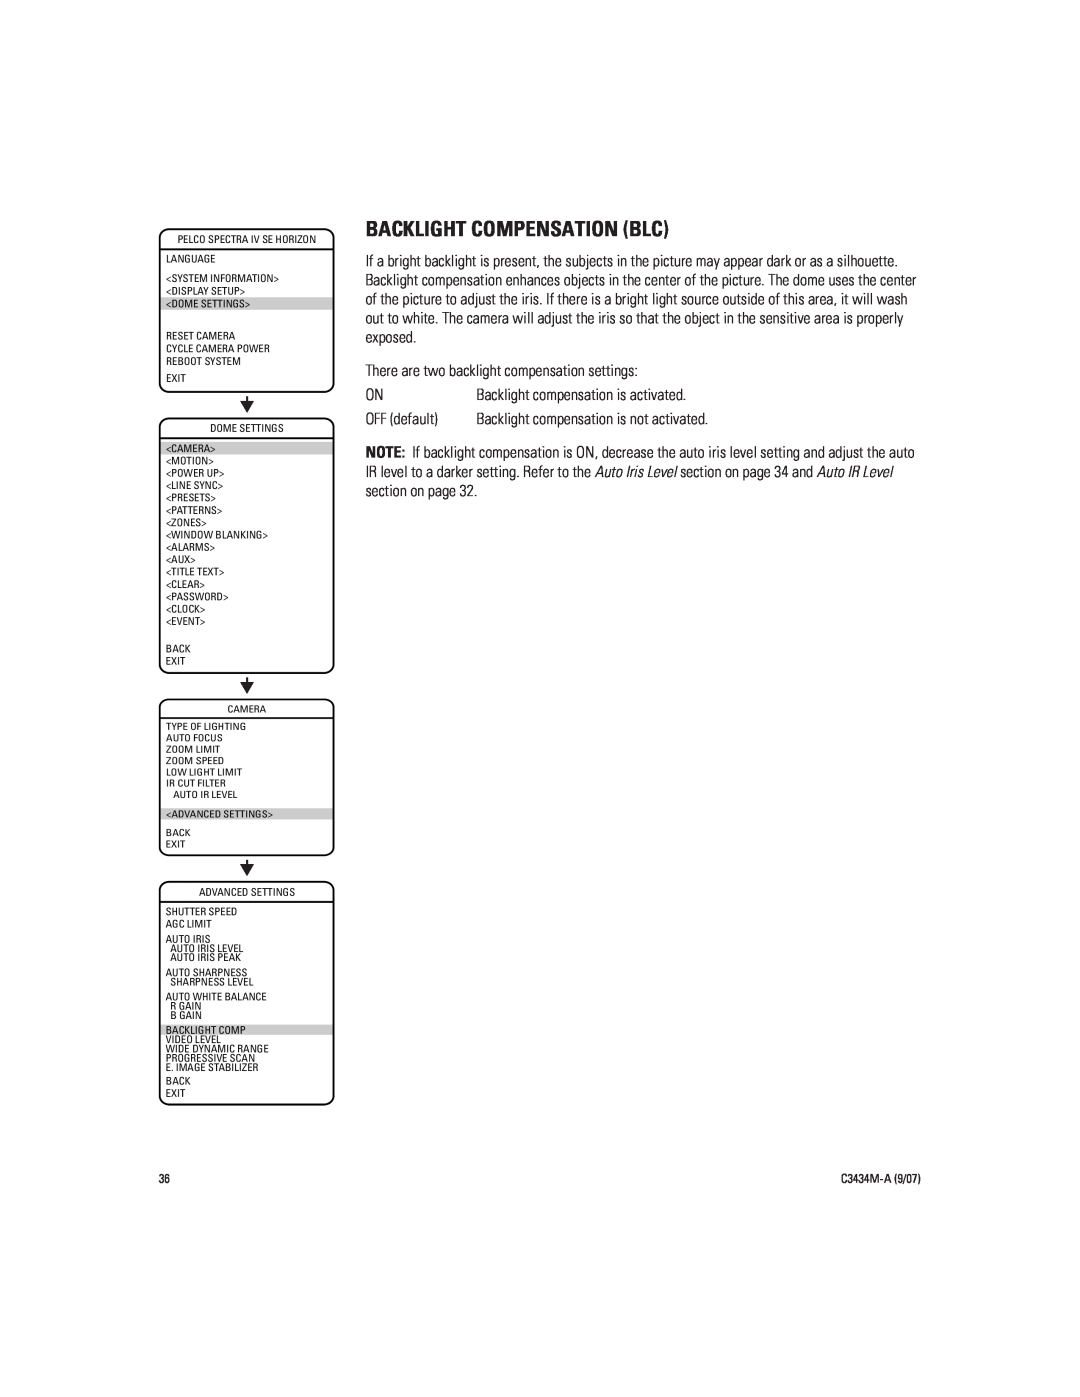 Pelco IV SE manual Backlight Compensation Blc, There are two backlight compensation settings, OFF default 